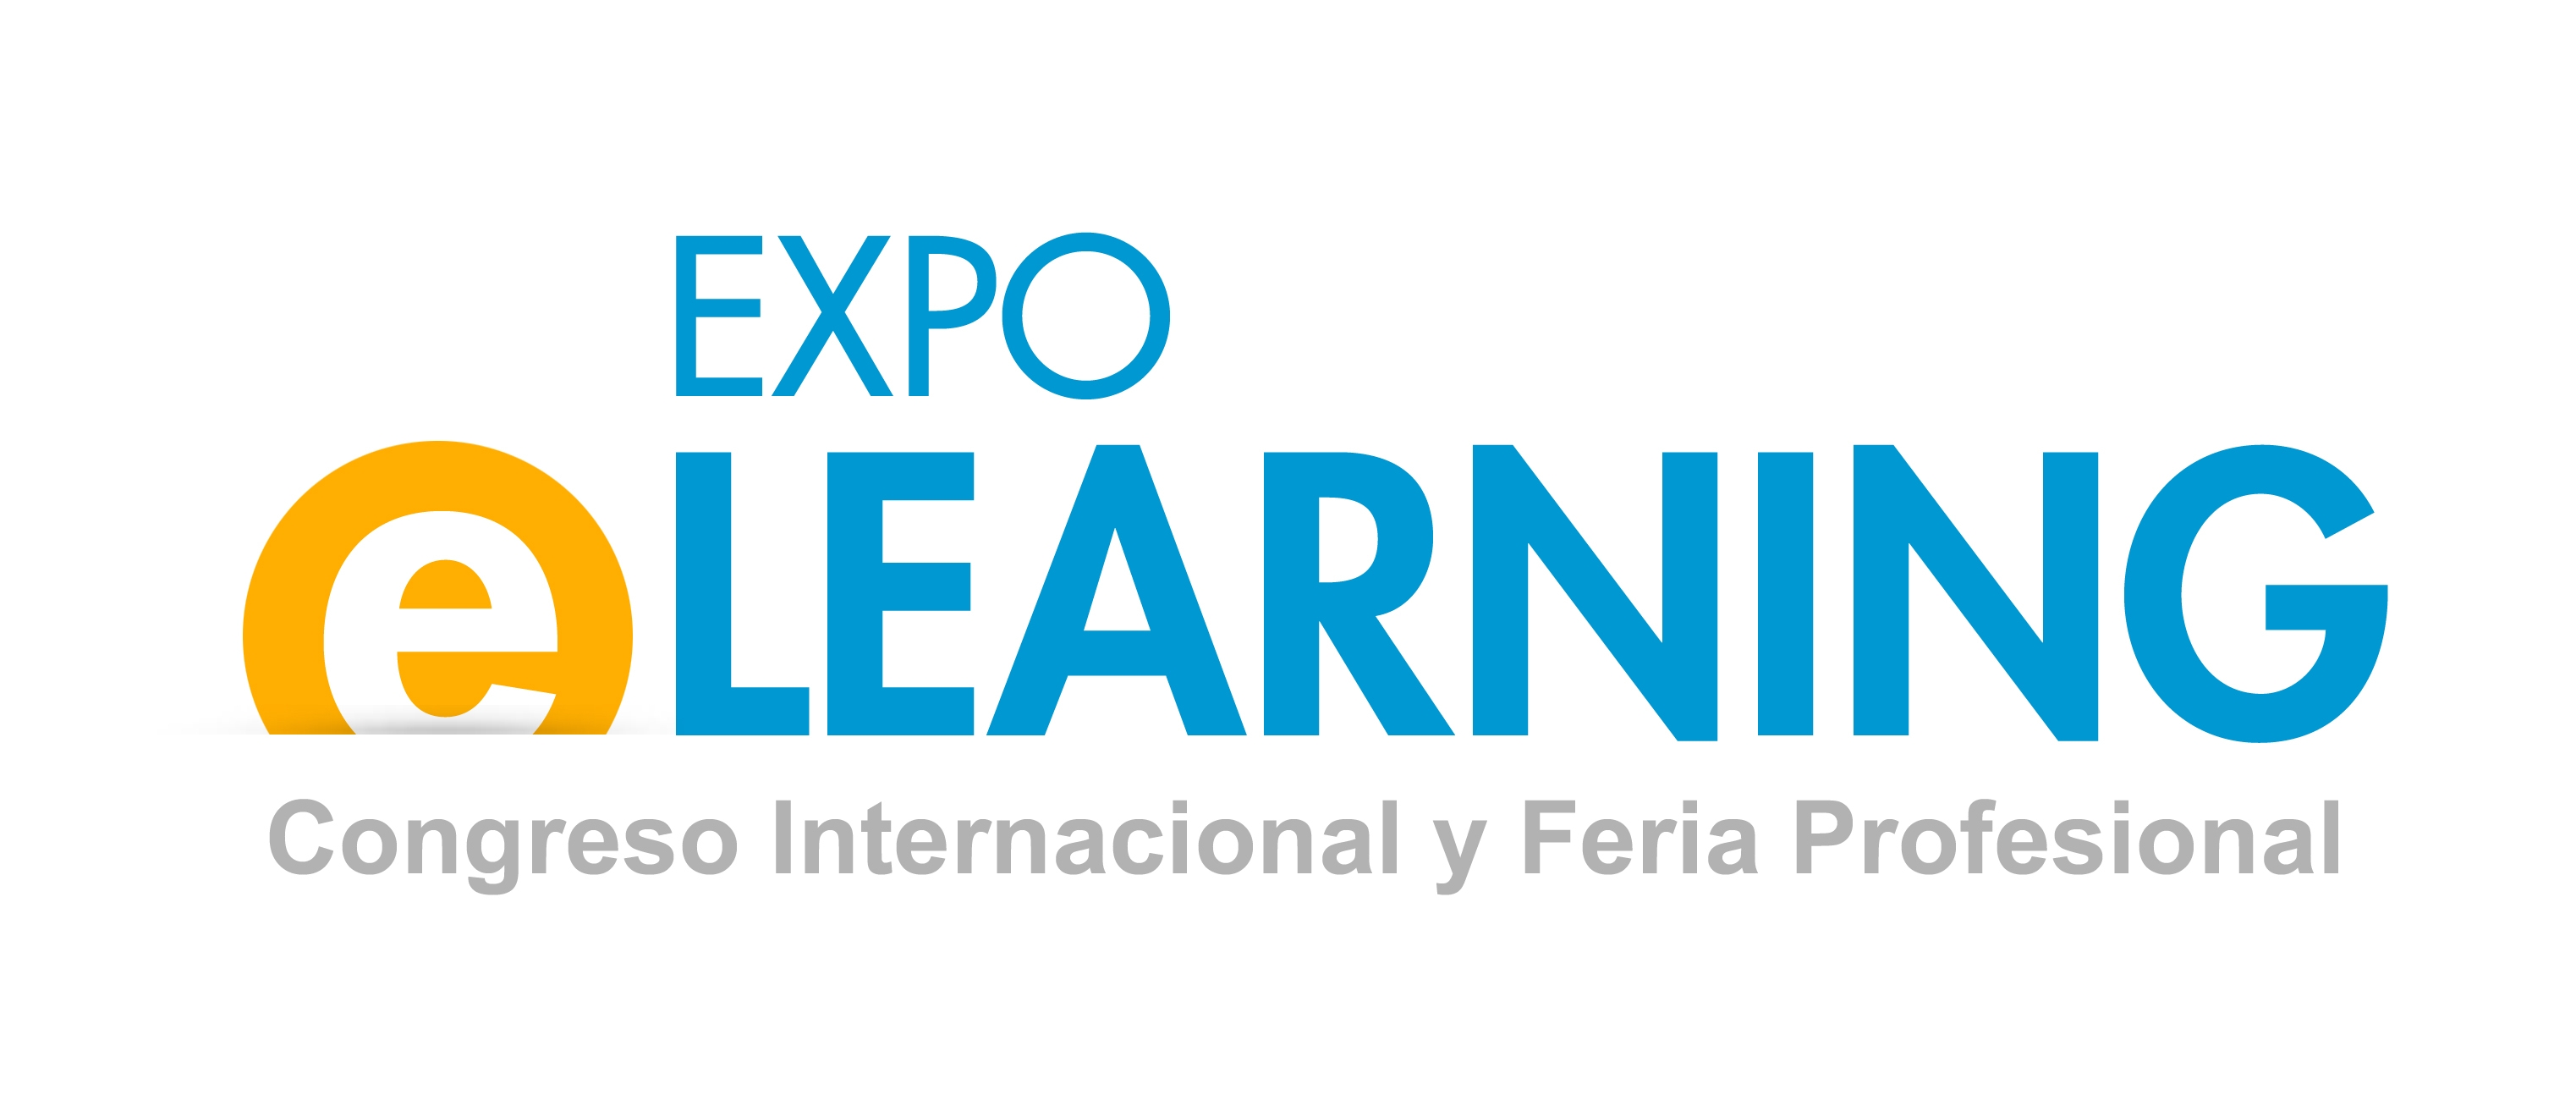 Expolearning madrid 2014